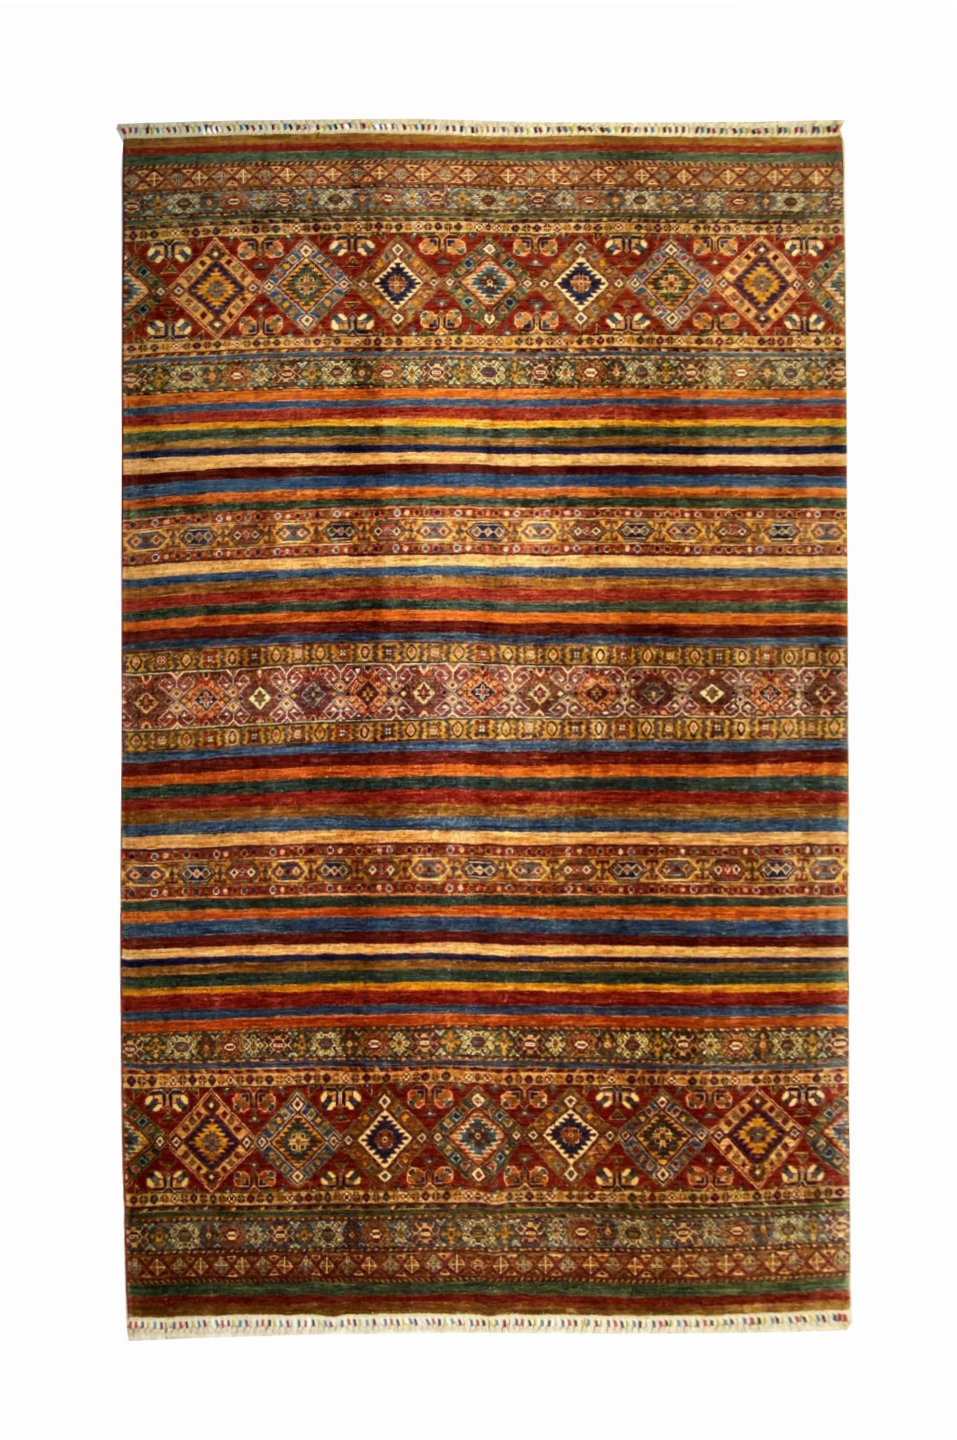 Şirvan Bicolor Carpet 291 x 206 cm